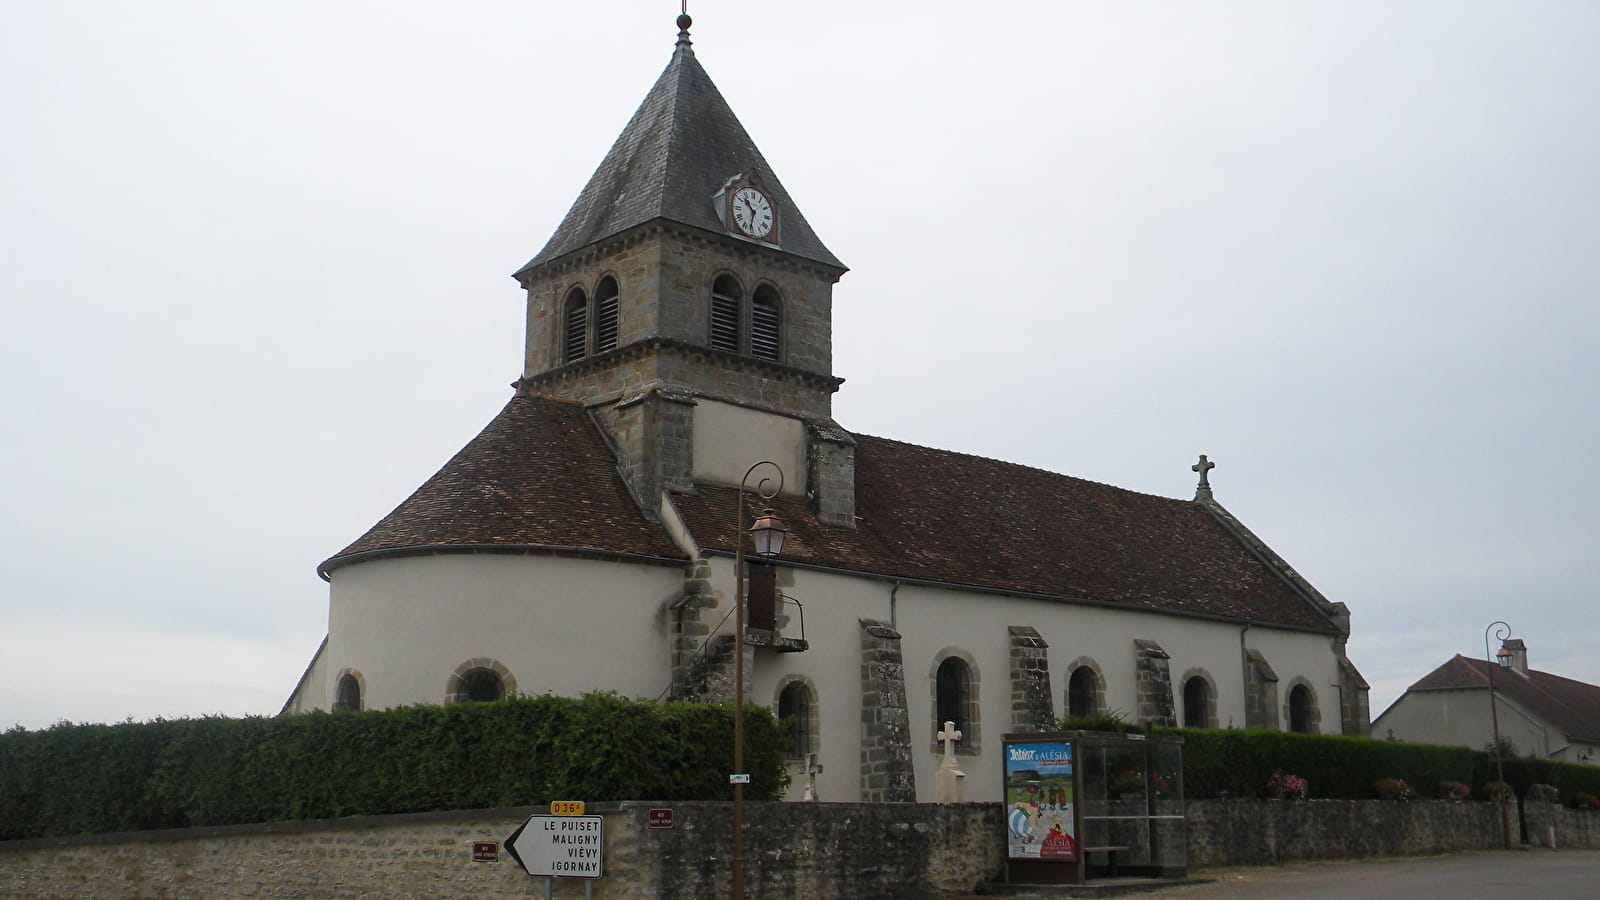 église St Aignan